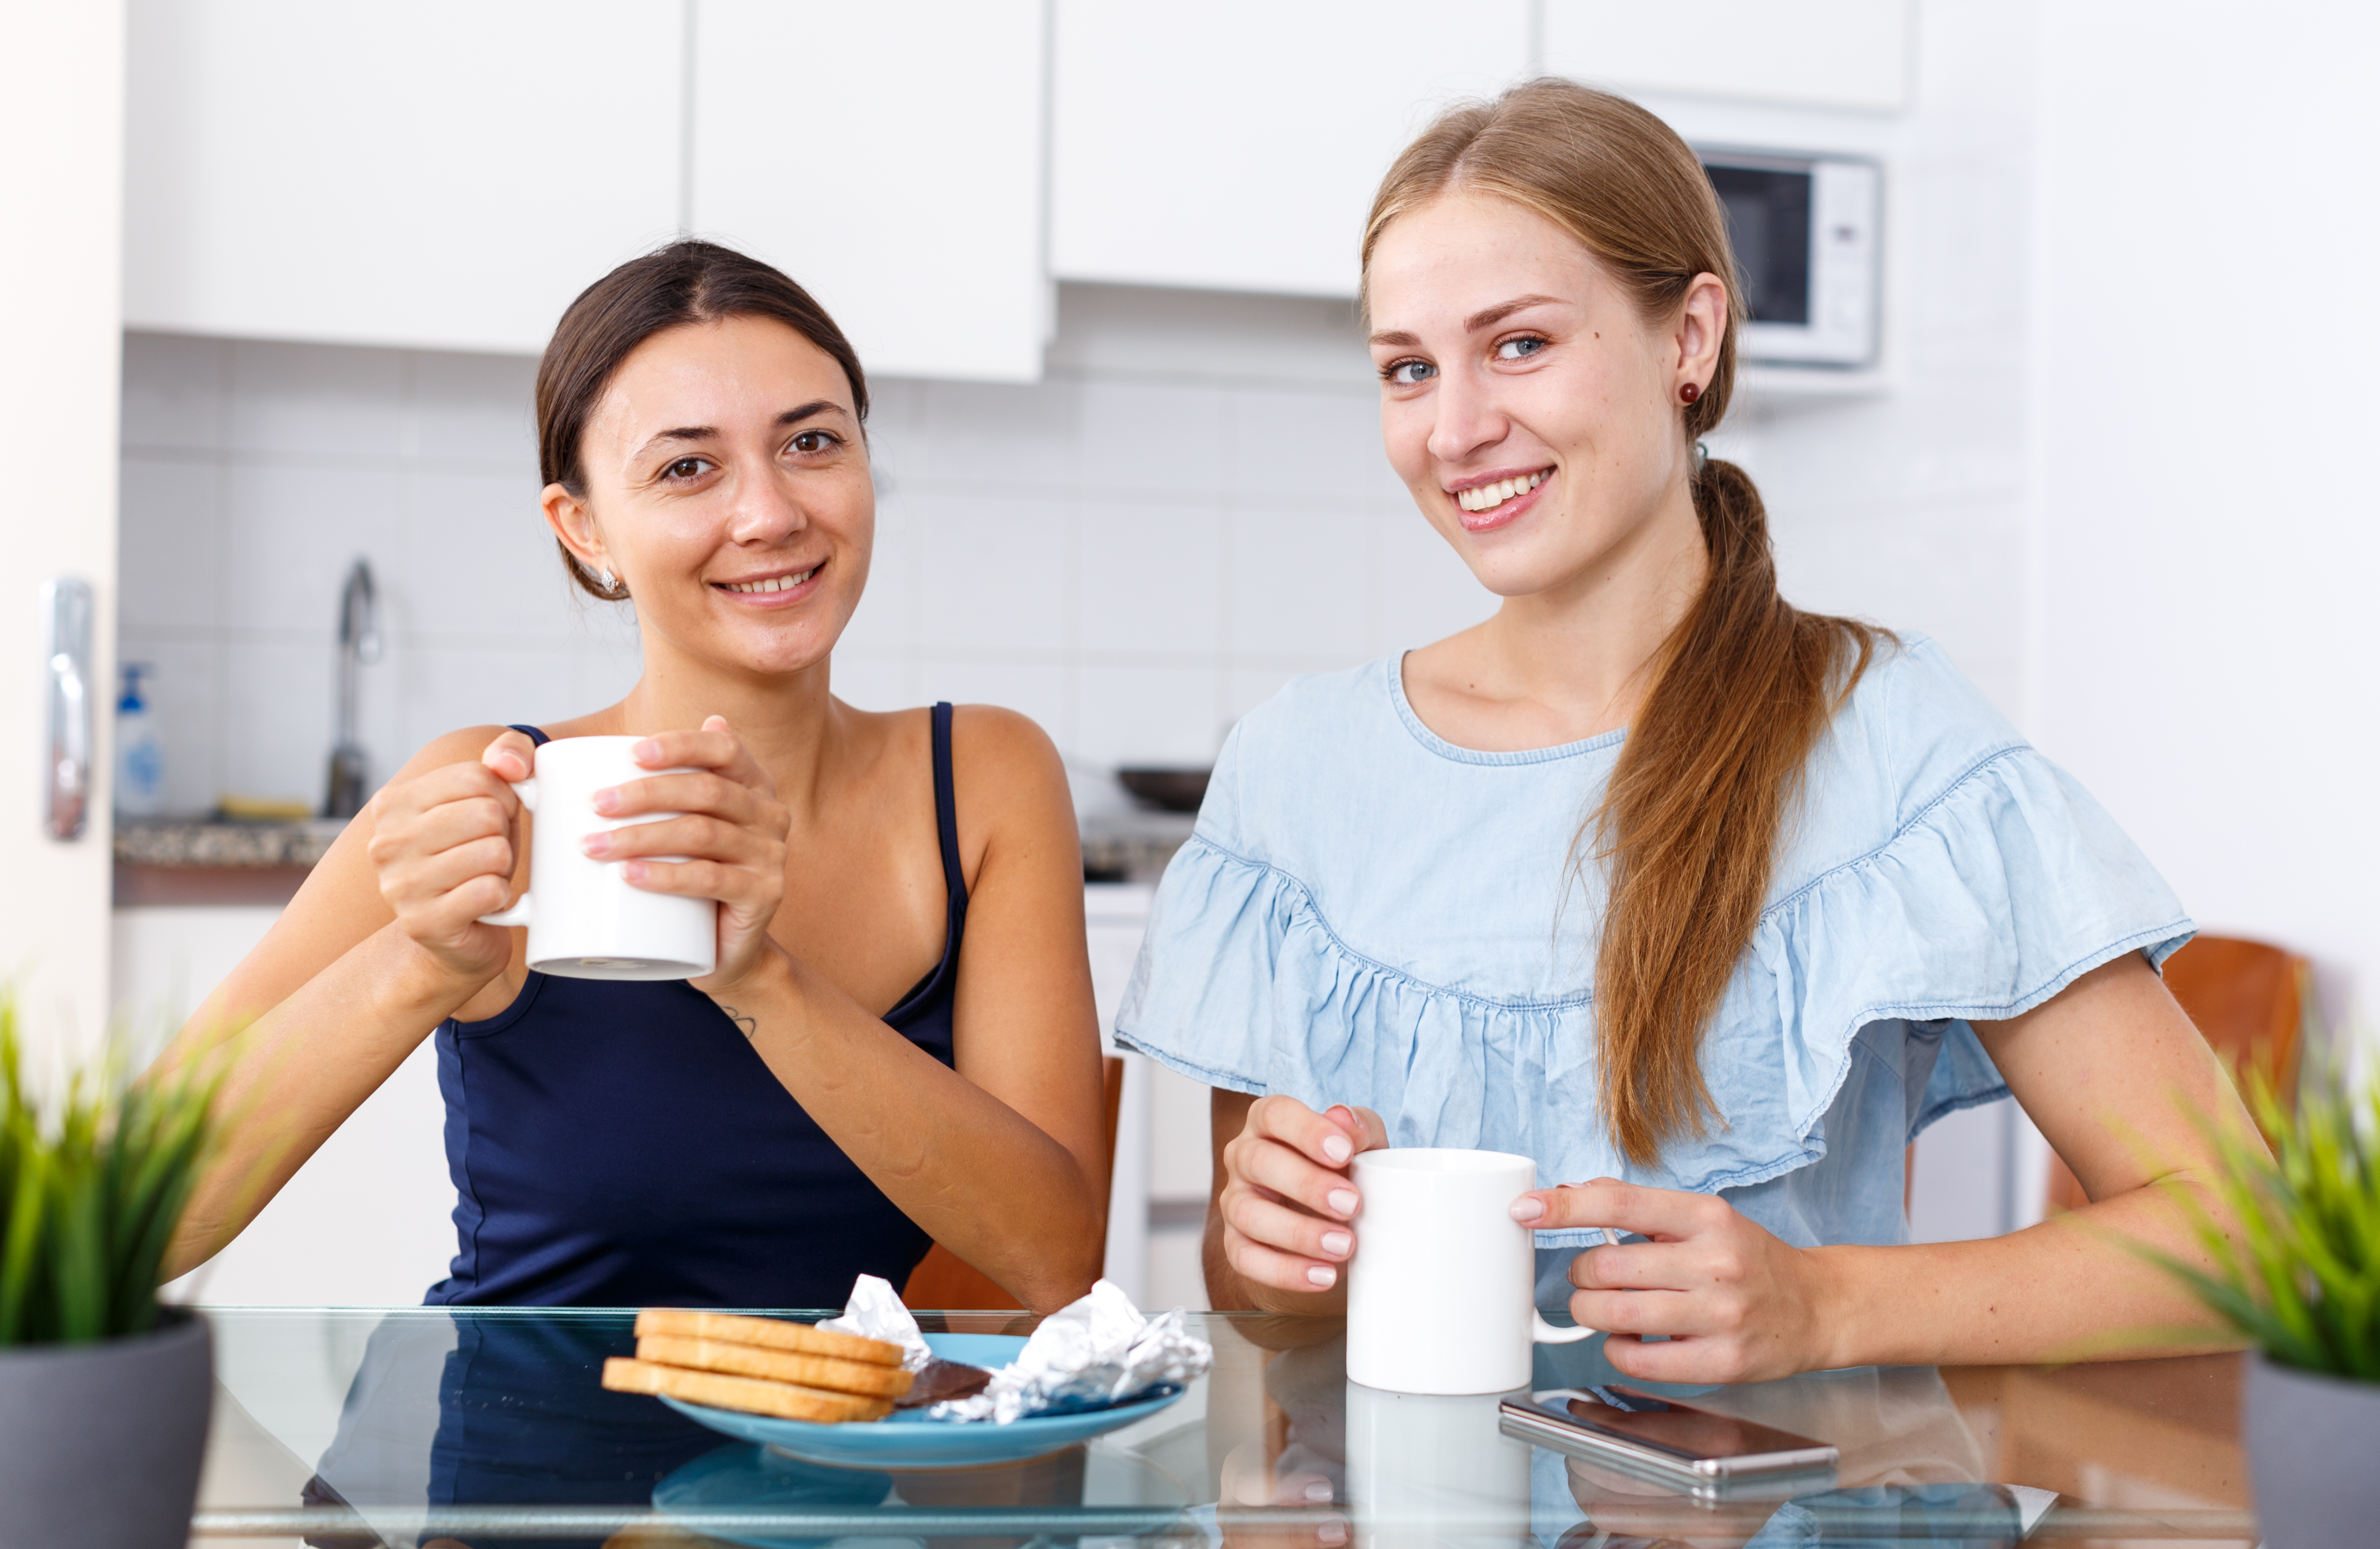 Two woman enjoying breakfast together | Source: Shutterstock